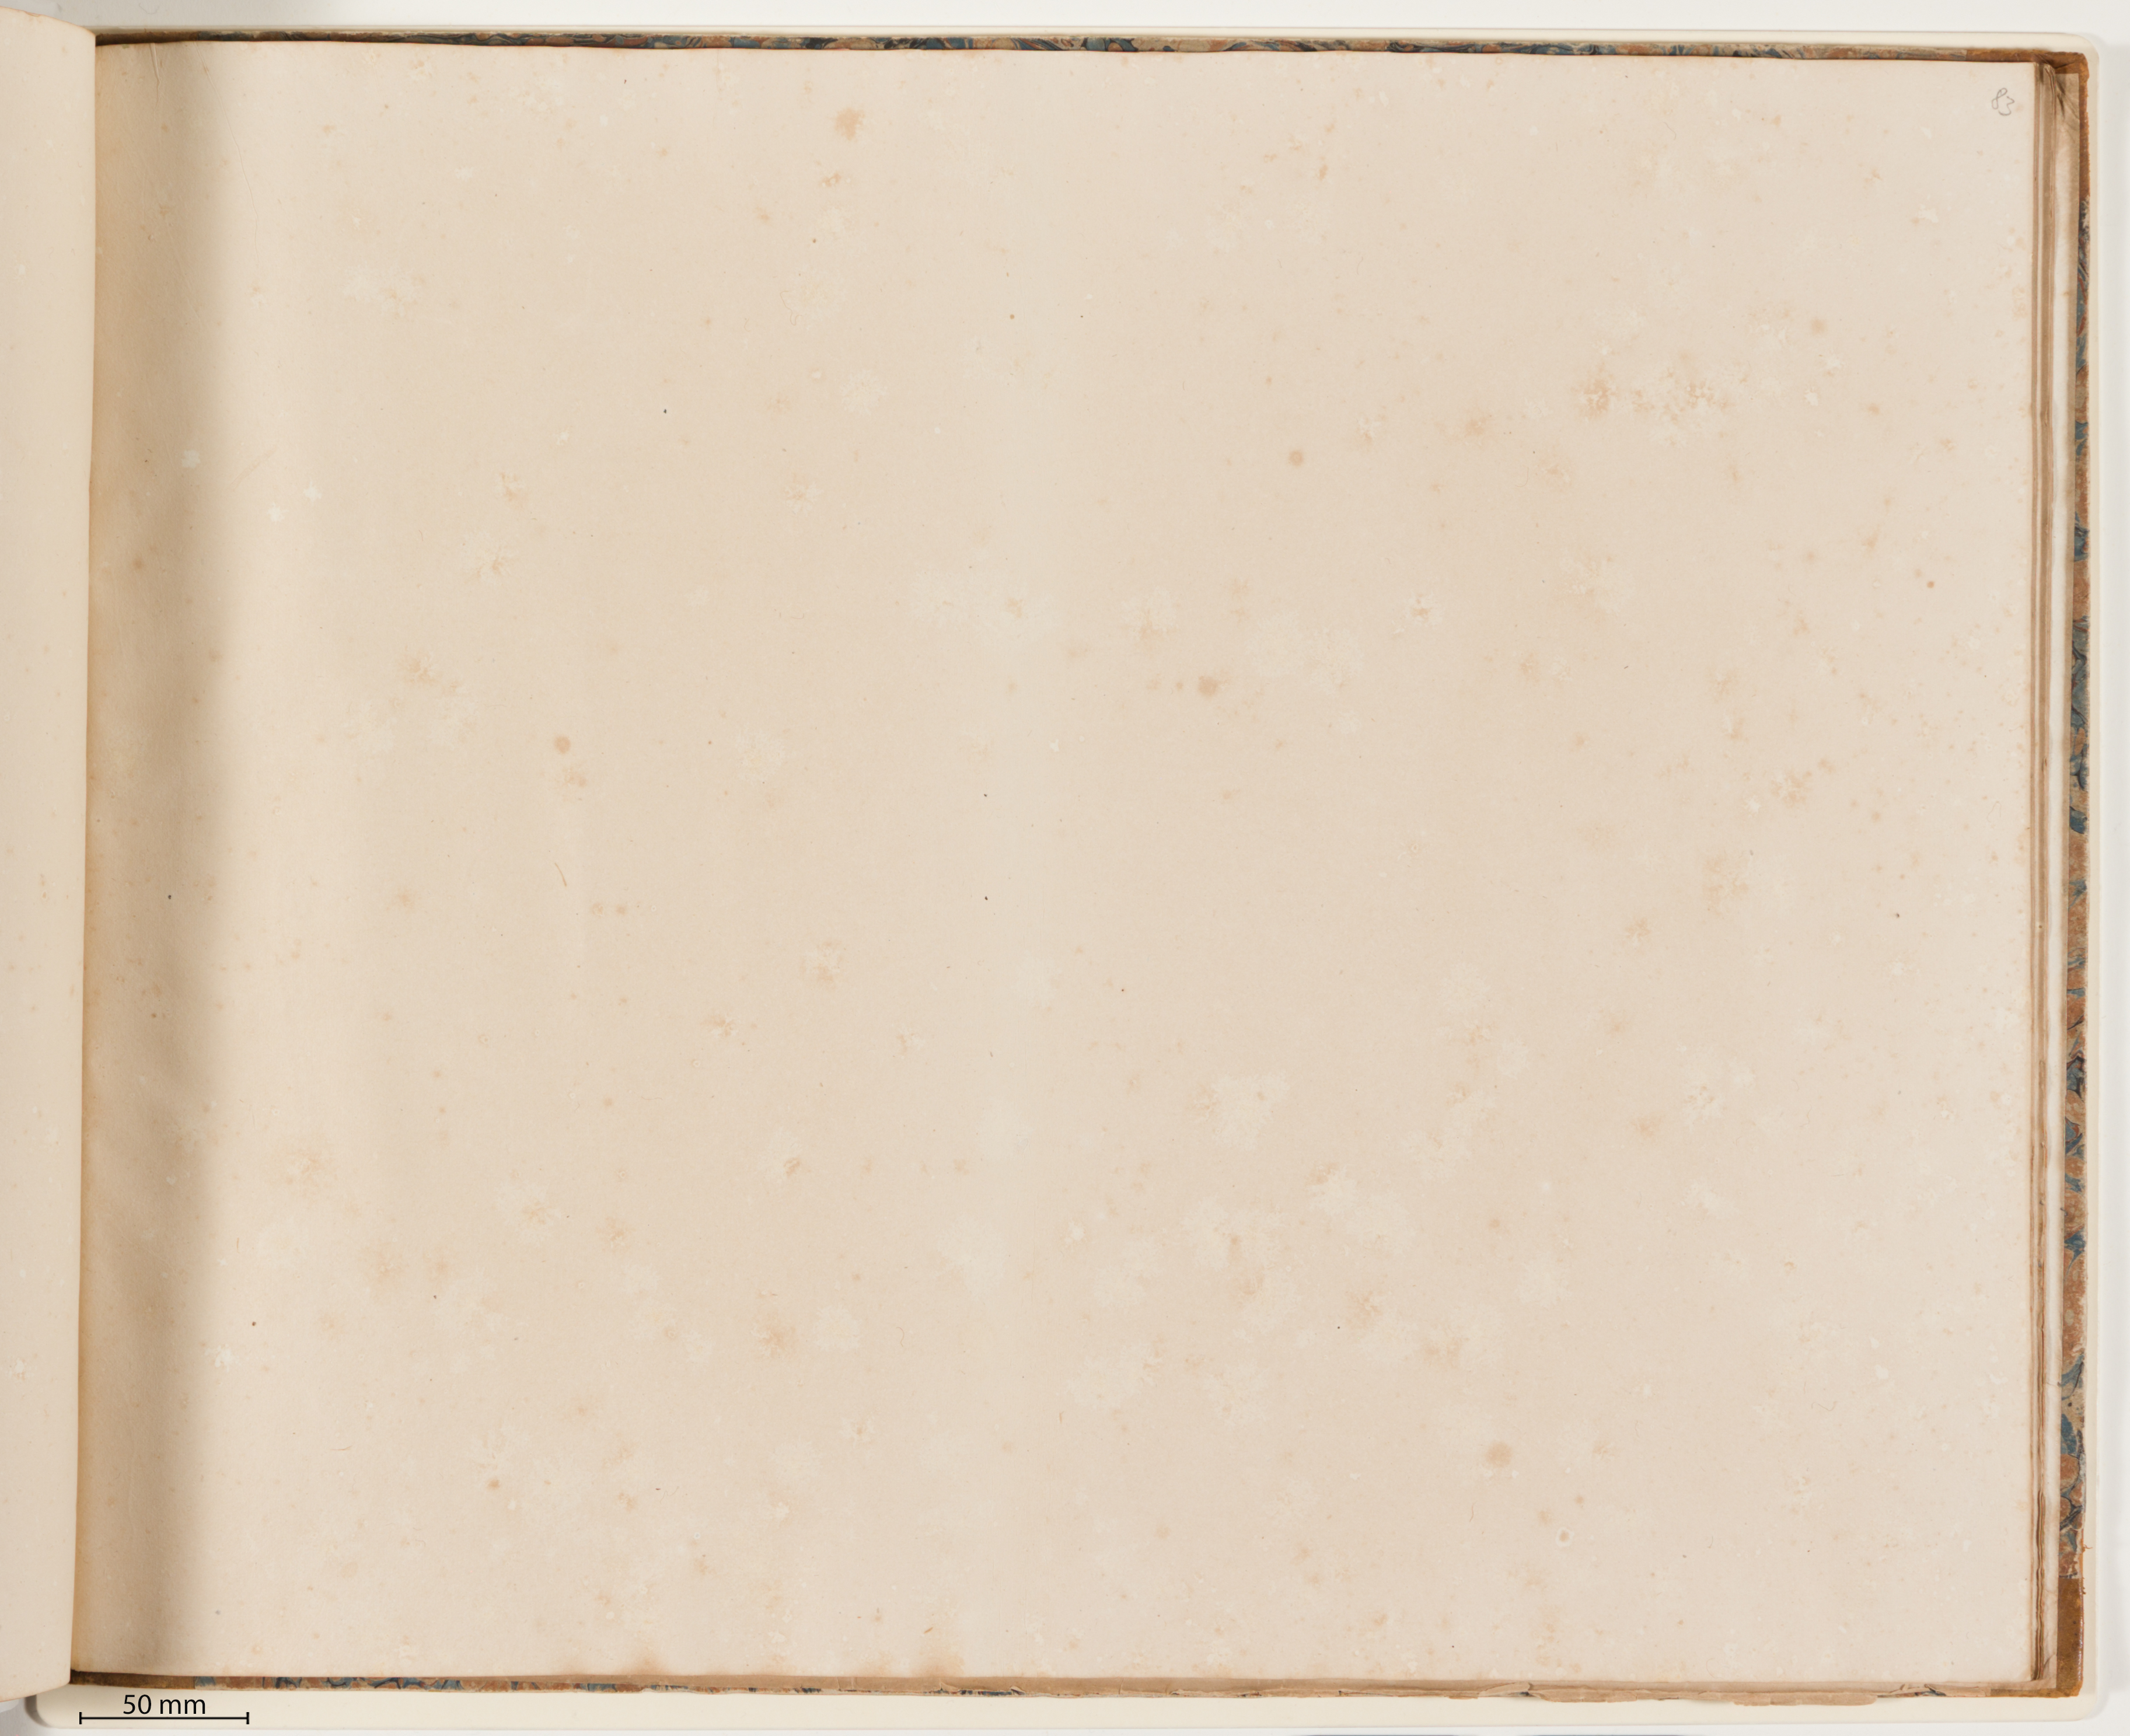 Eighty-third sheet from album 1, incident light photograph of the blank sheet